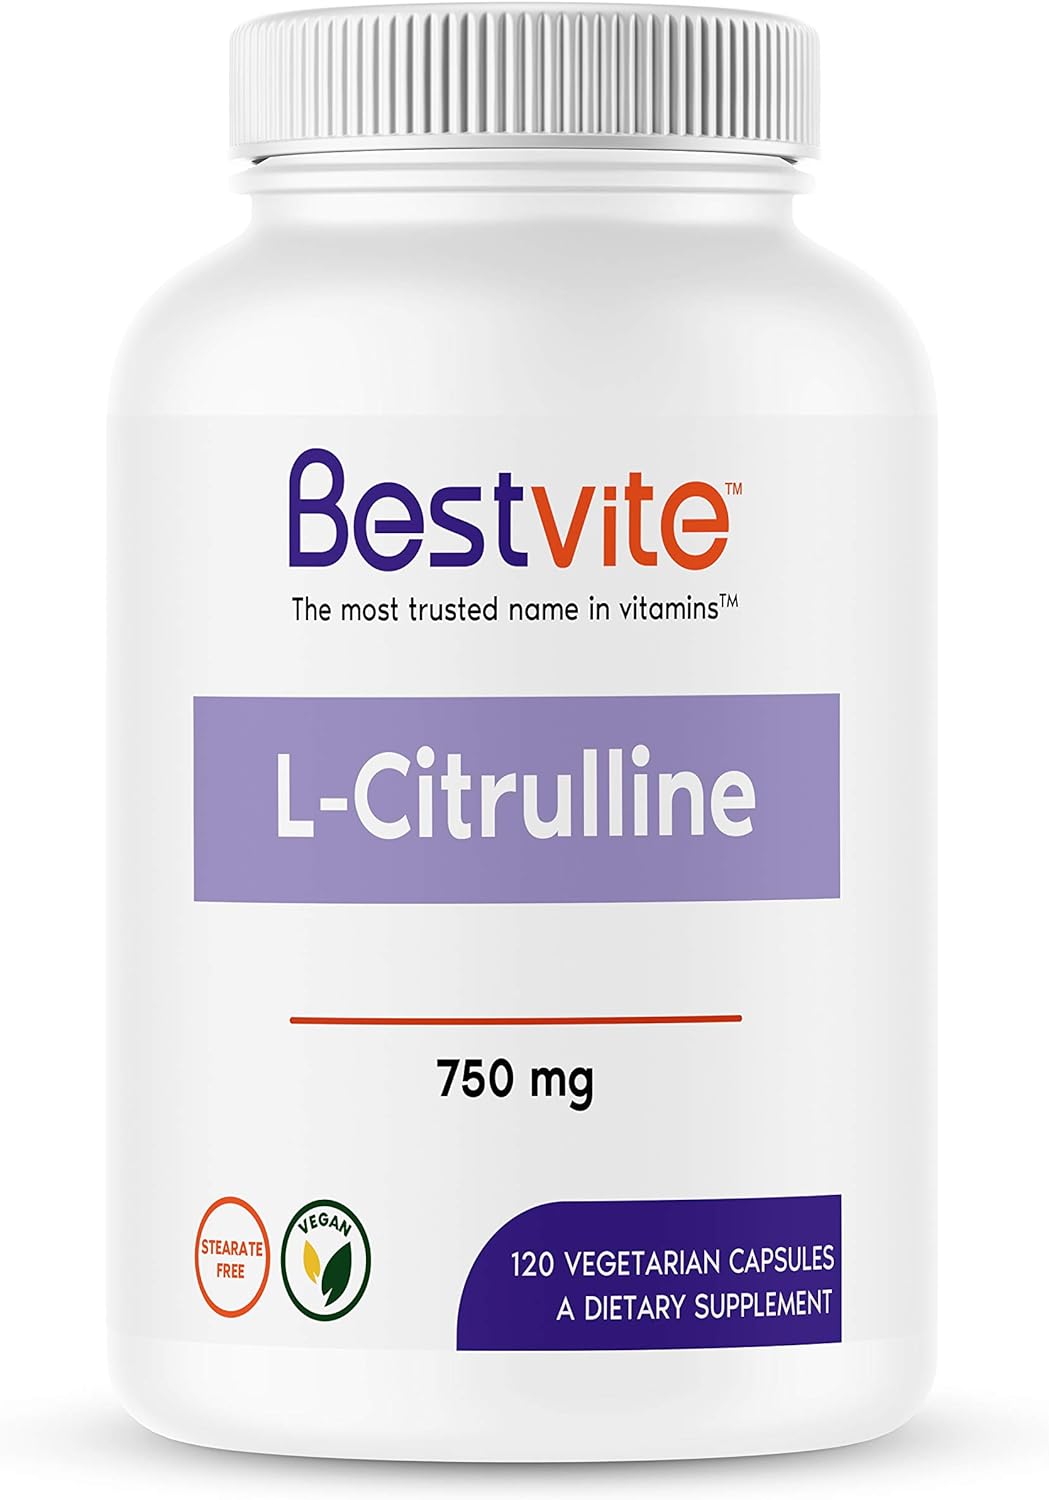 BESTVITE L-Citrulline 750mg per Capsule (120 Vegetarian Capsules) - No